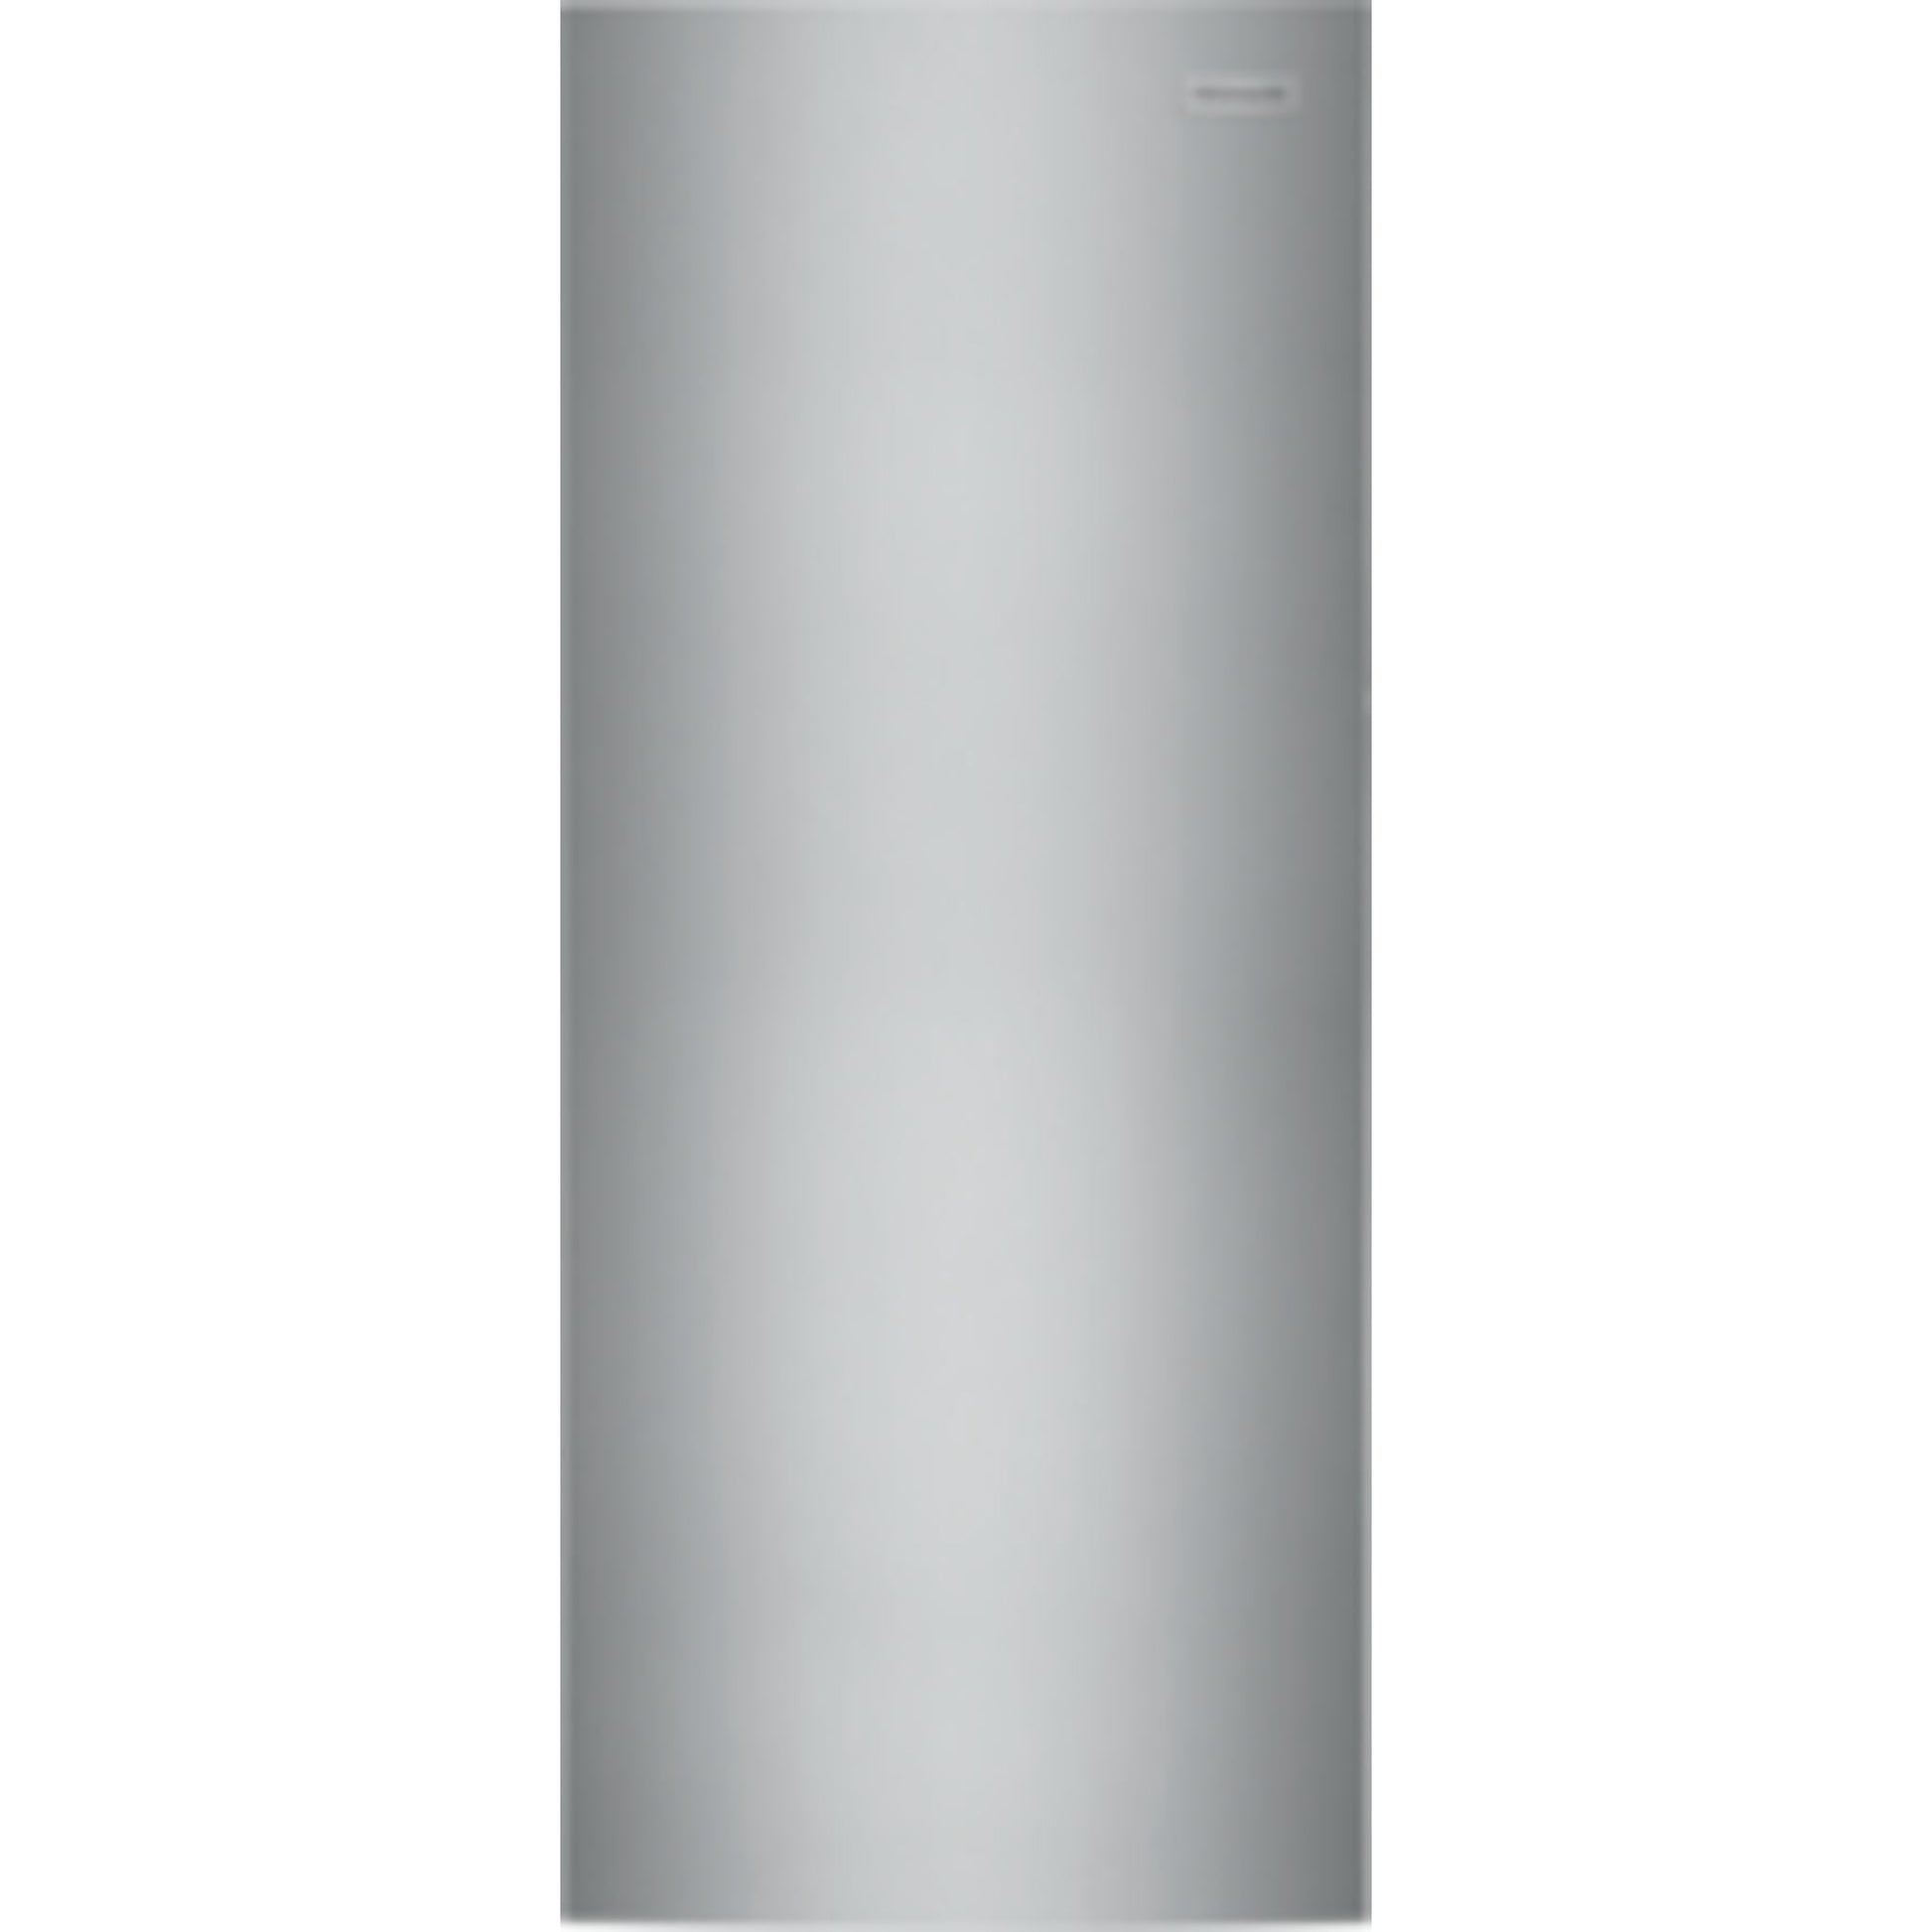 Frigidaire Upright Freezer (FFFU16F2VV) - STEEL